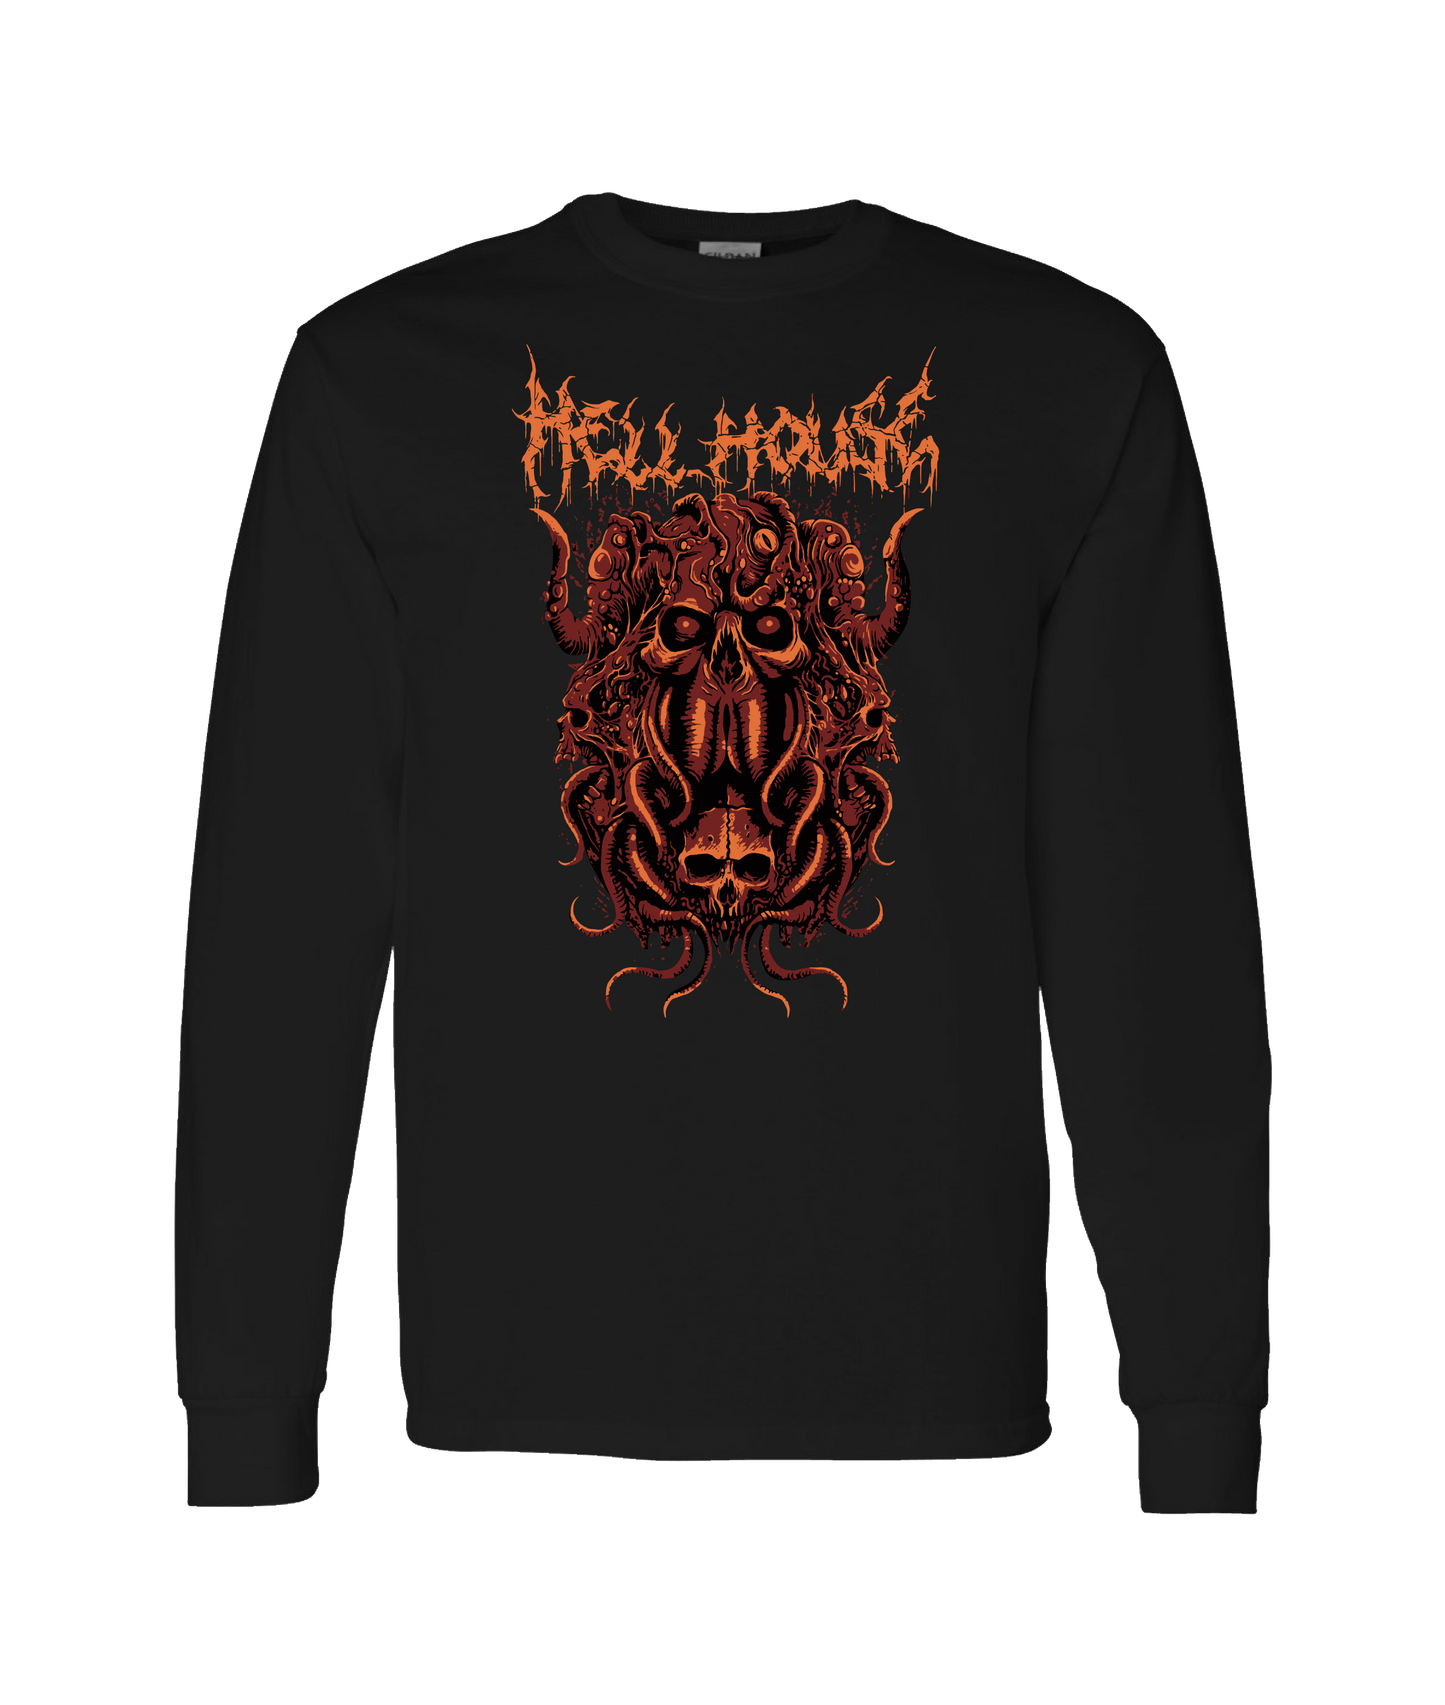 Hellhouse crypt - OCTOPUSSSKVLL - Black Long Sleeve T